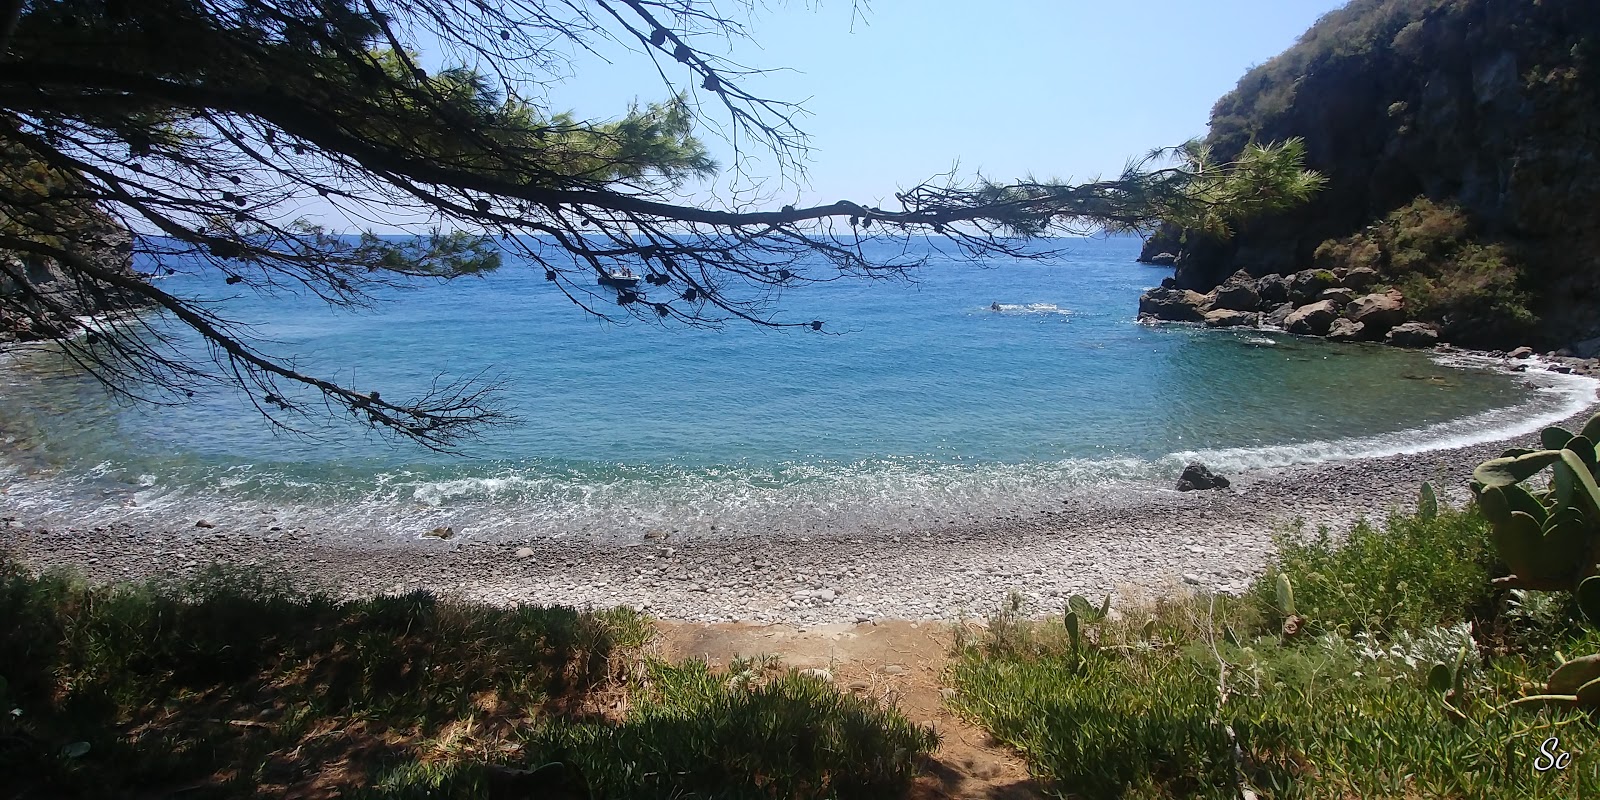 Fotografija La Scissice beach z sivi kamenček površino